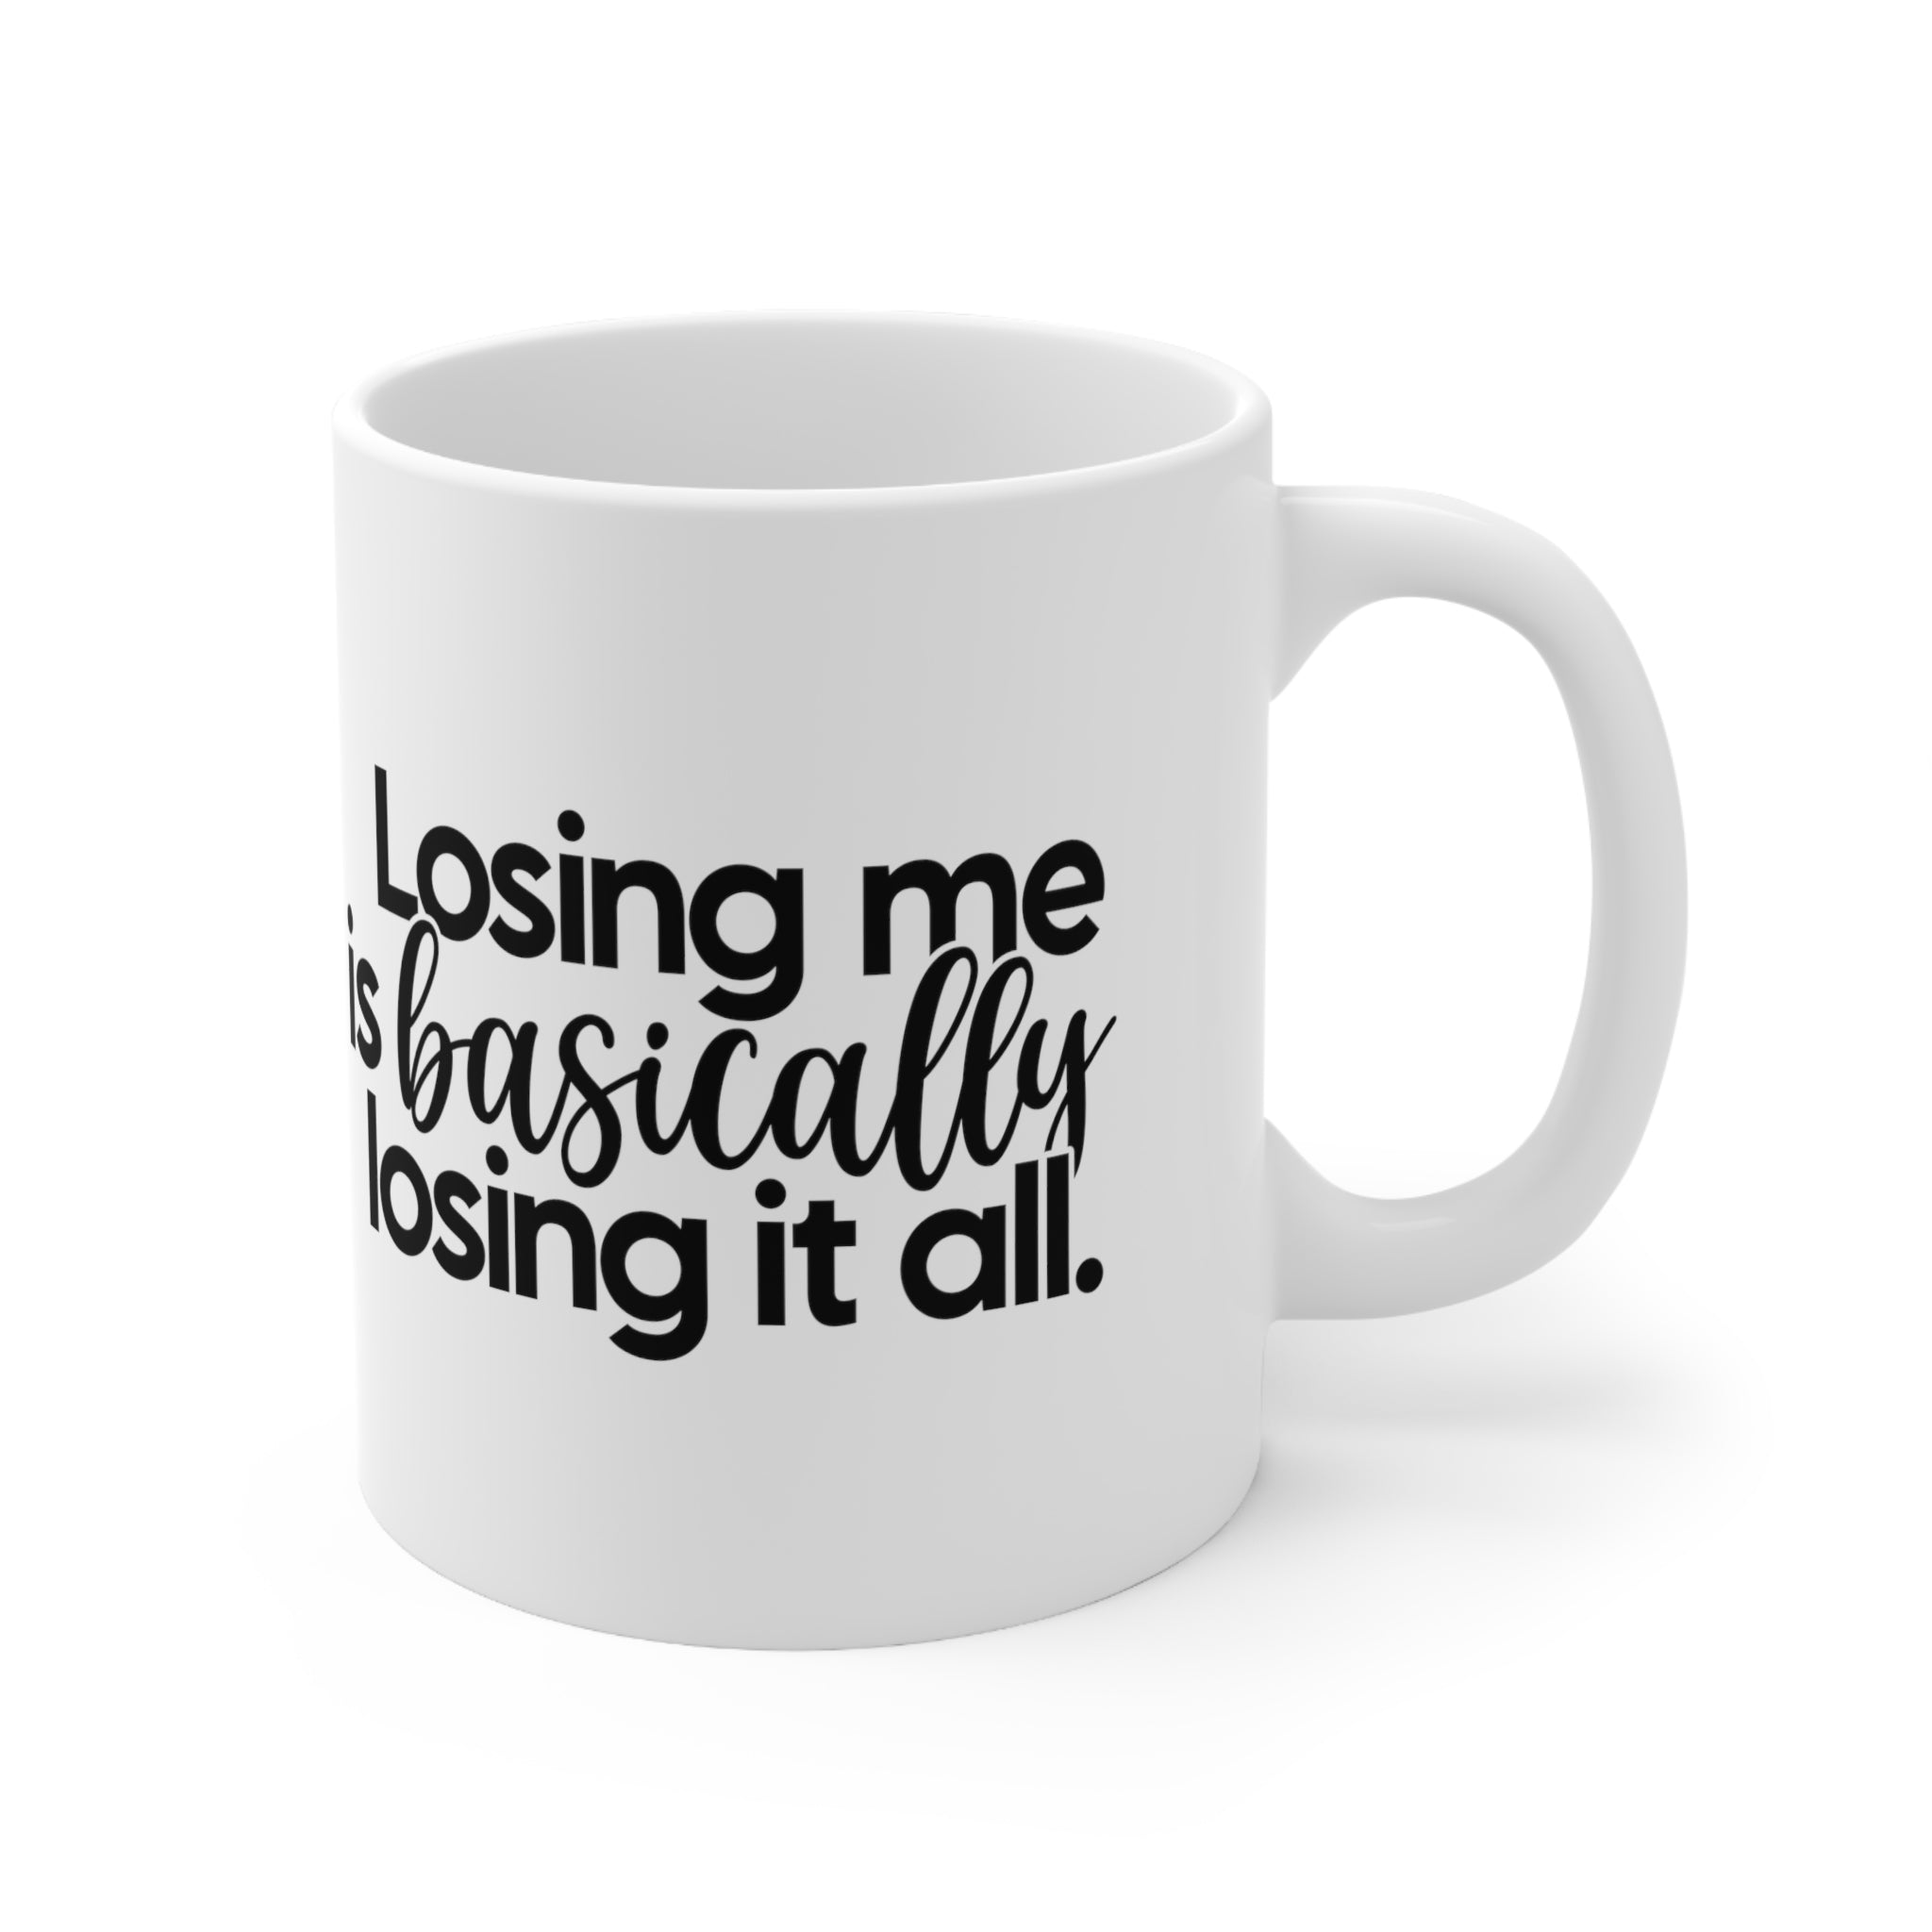 Losing Me Is Basically Losing It All  Ceramic Mug 11oz